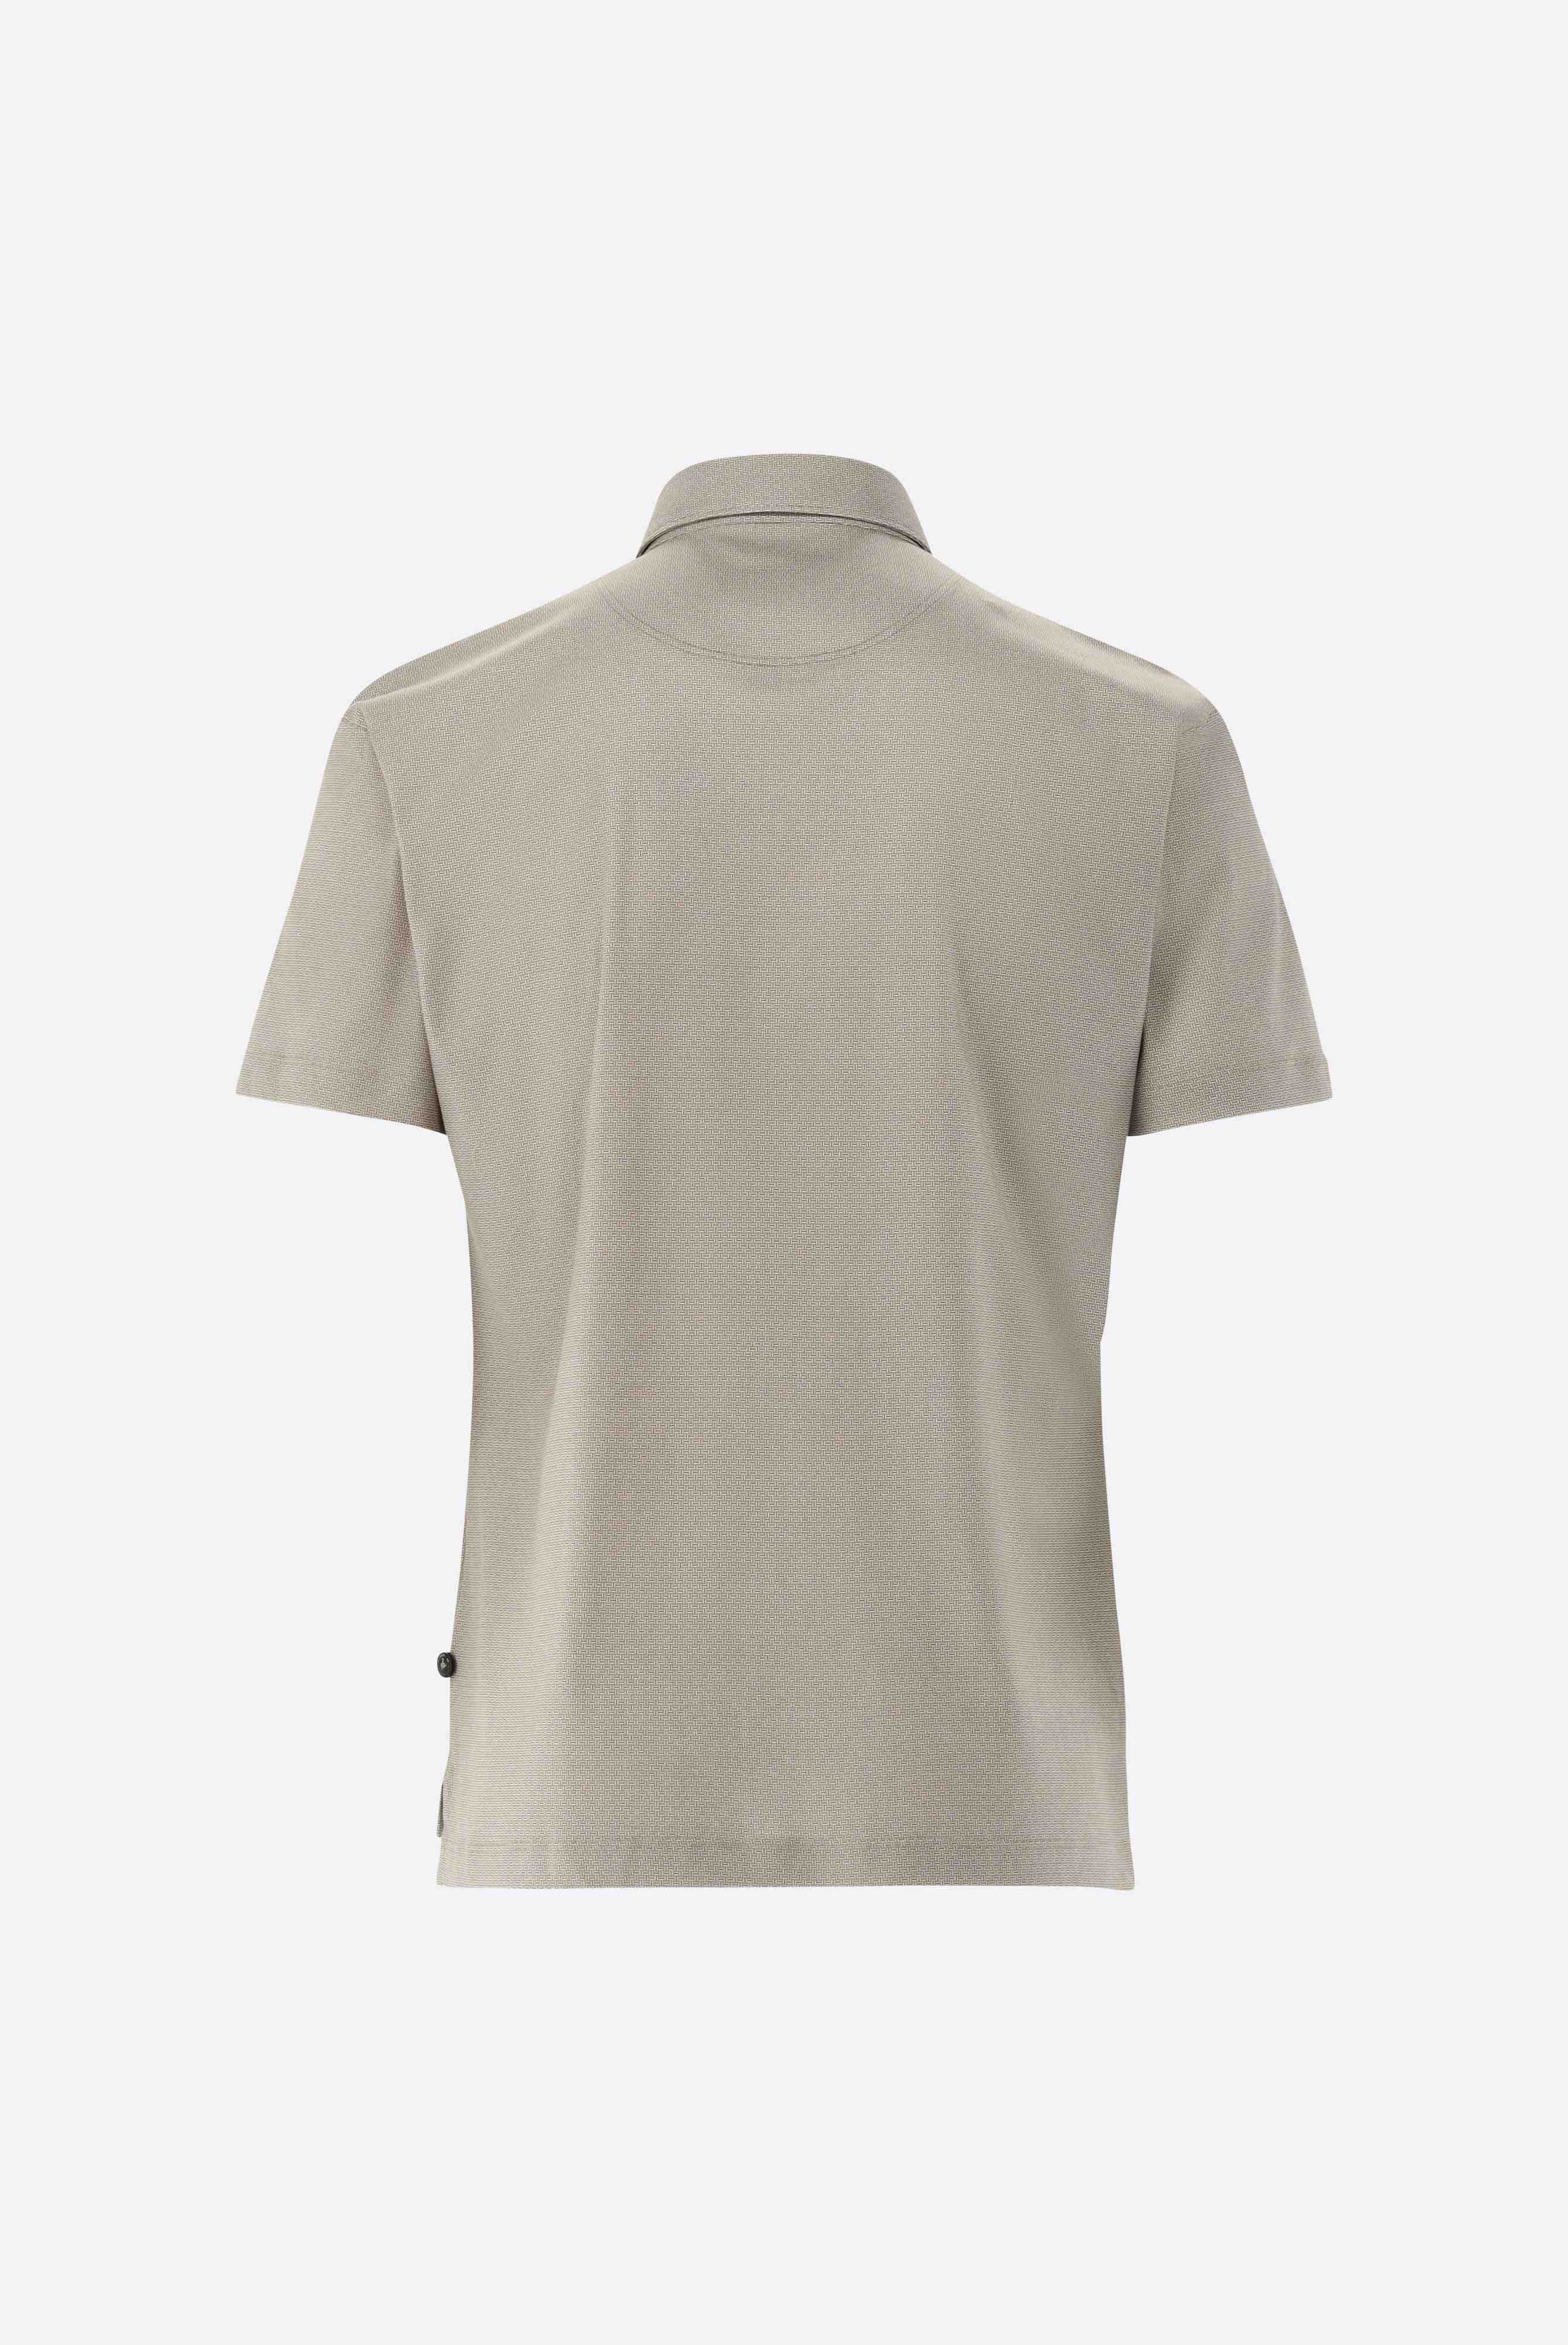 Poloshirts+Jersey Polo Shirt with Micro Print made of Swiss Cotton+20.1720.UC.187754.130.S